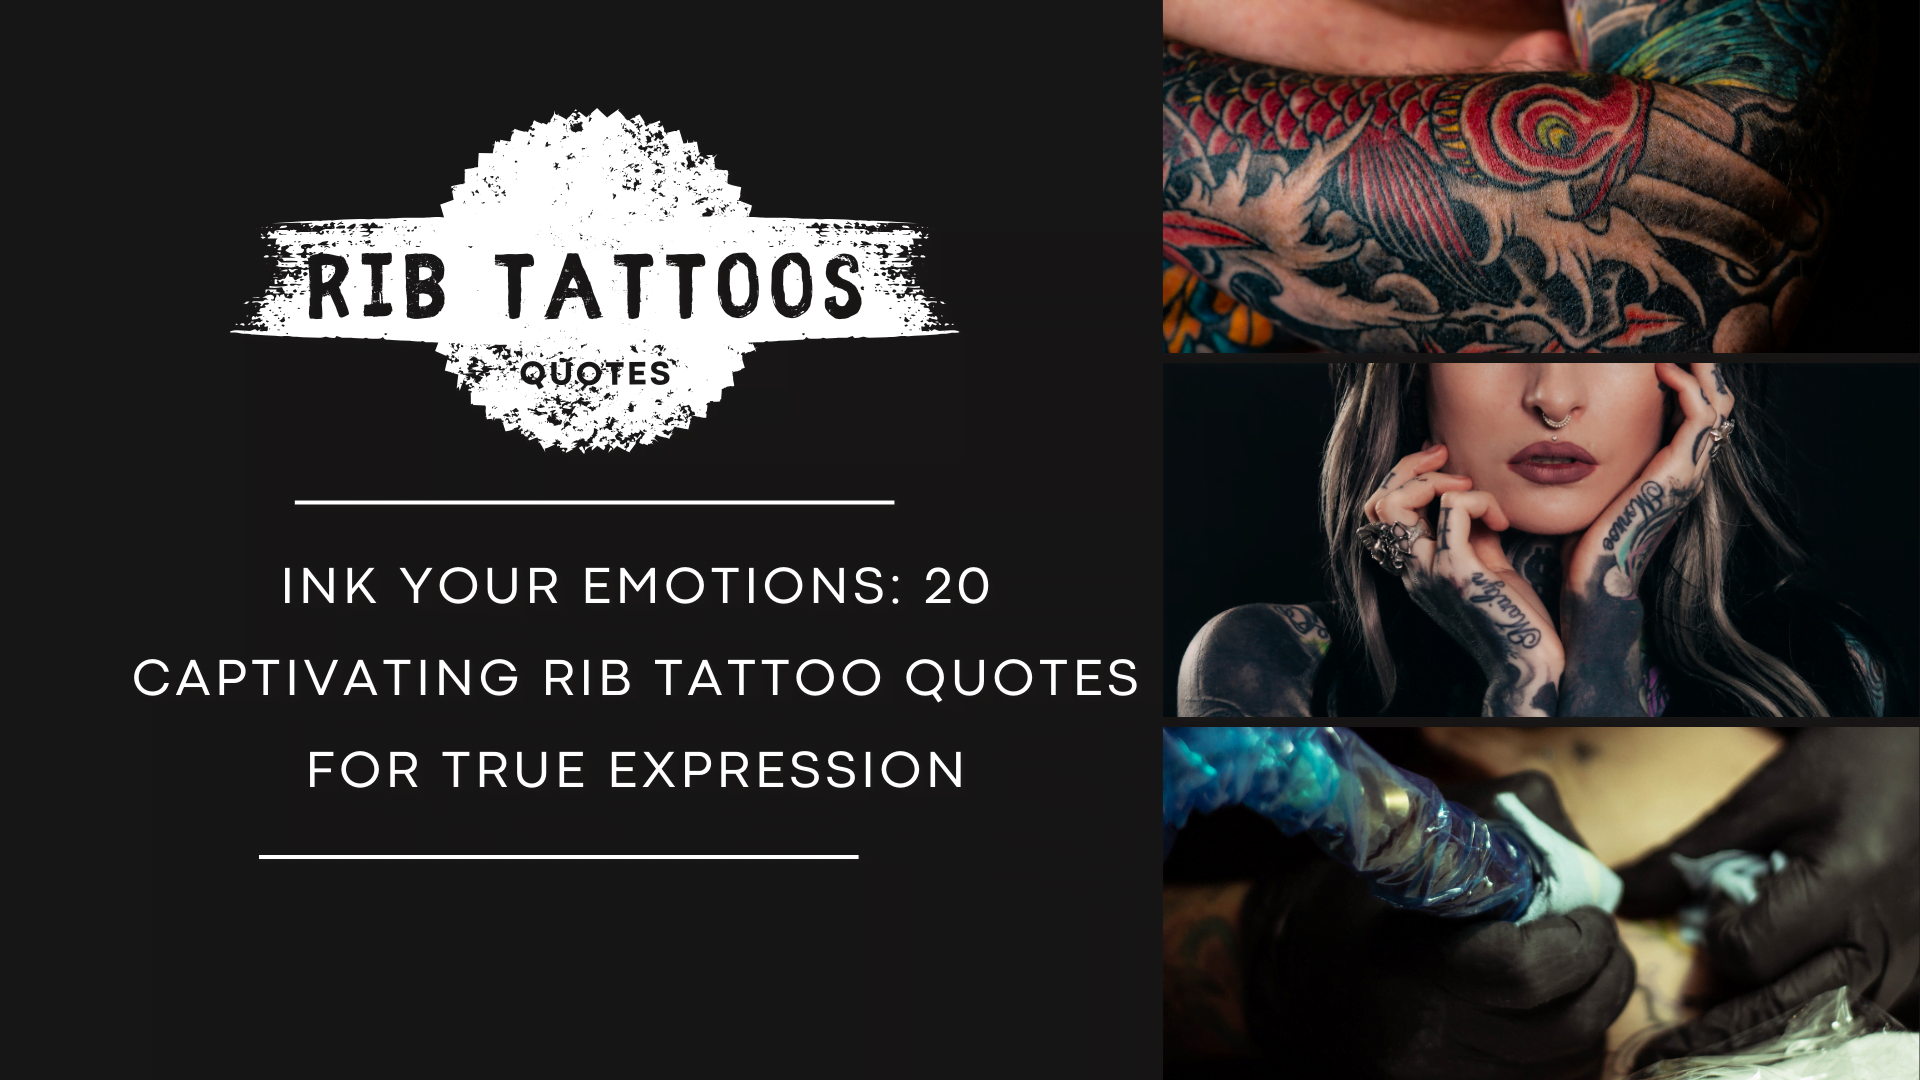 Rib Tattoos Quotes cover photo